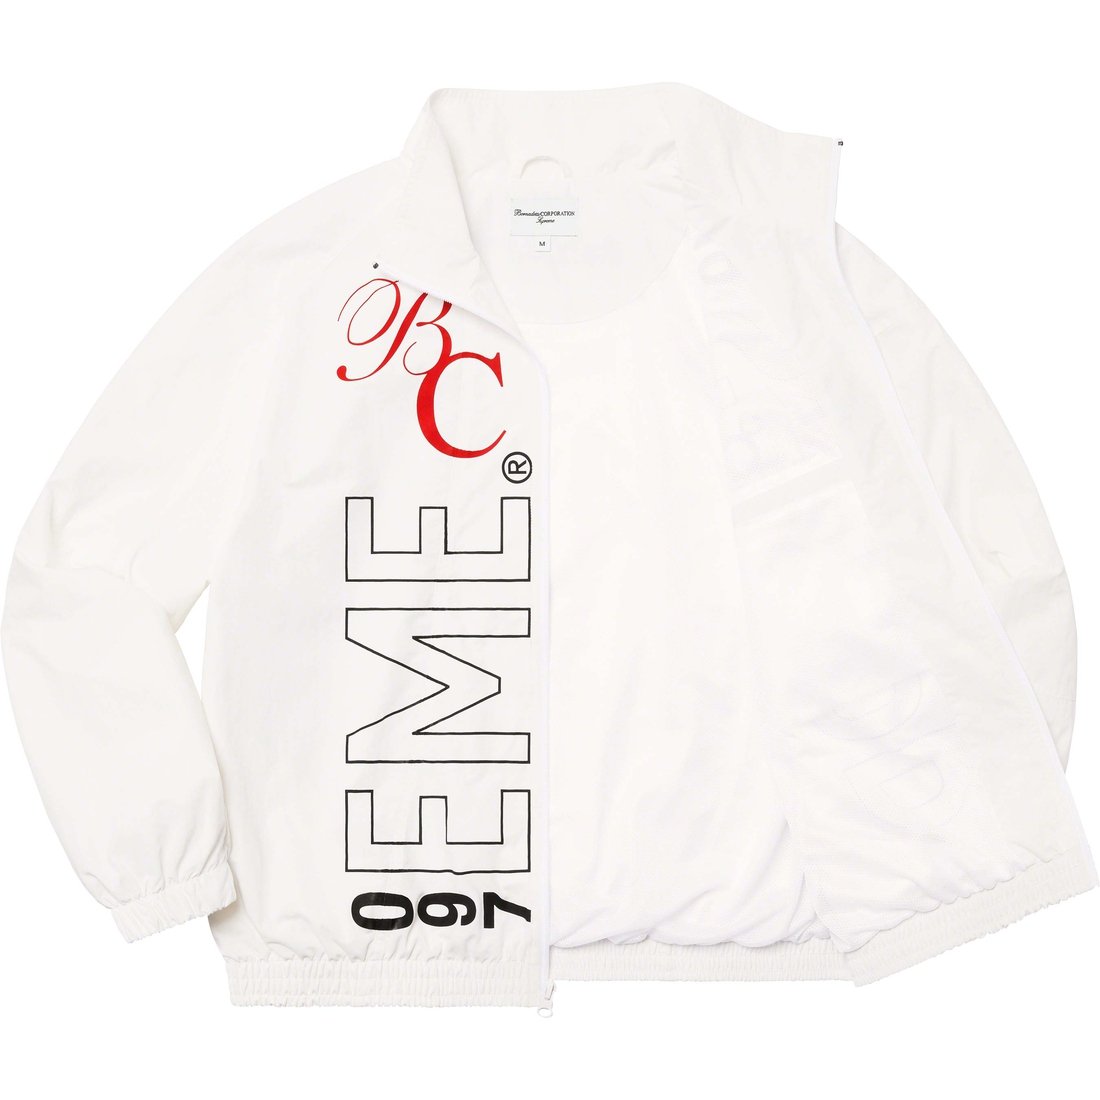 Details on Supreme Bernadette Corporation Track Jacket White from spring summer 2023 (Price is $188)